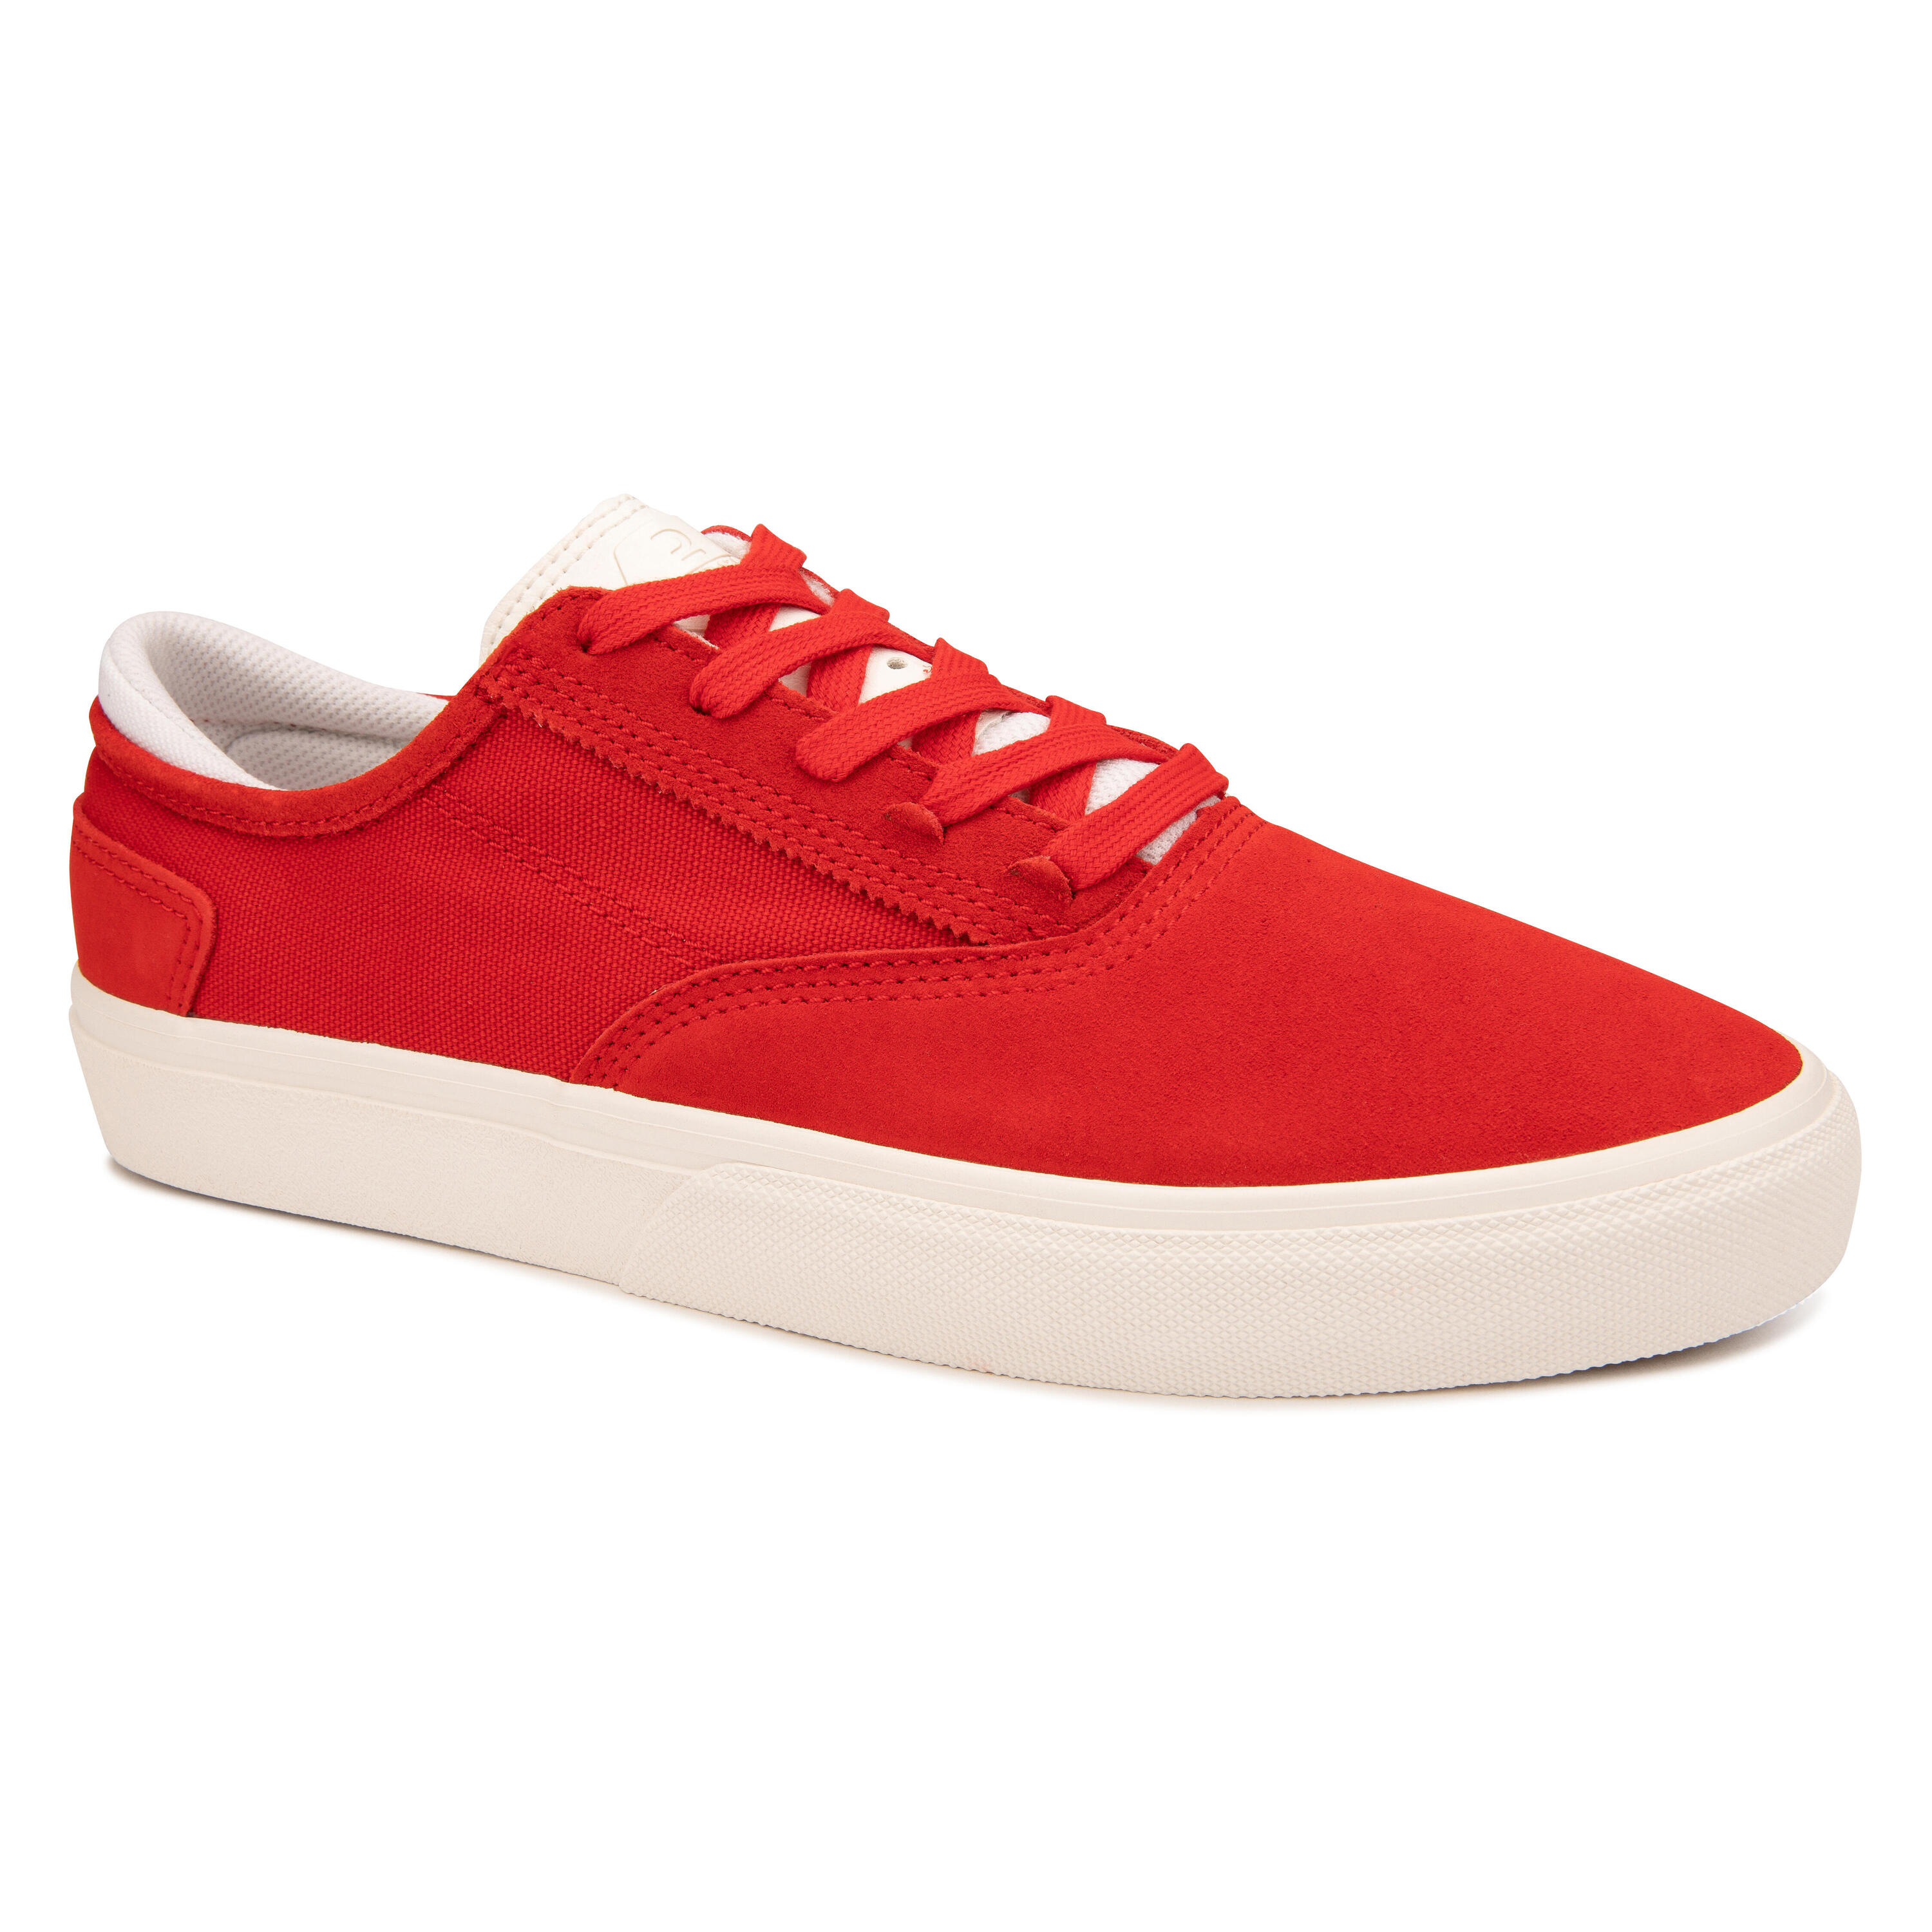 OXELO Adult Vulcanised Skate Shoes Vulca 500 II - Red/White